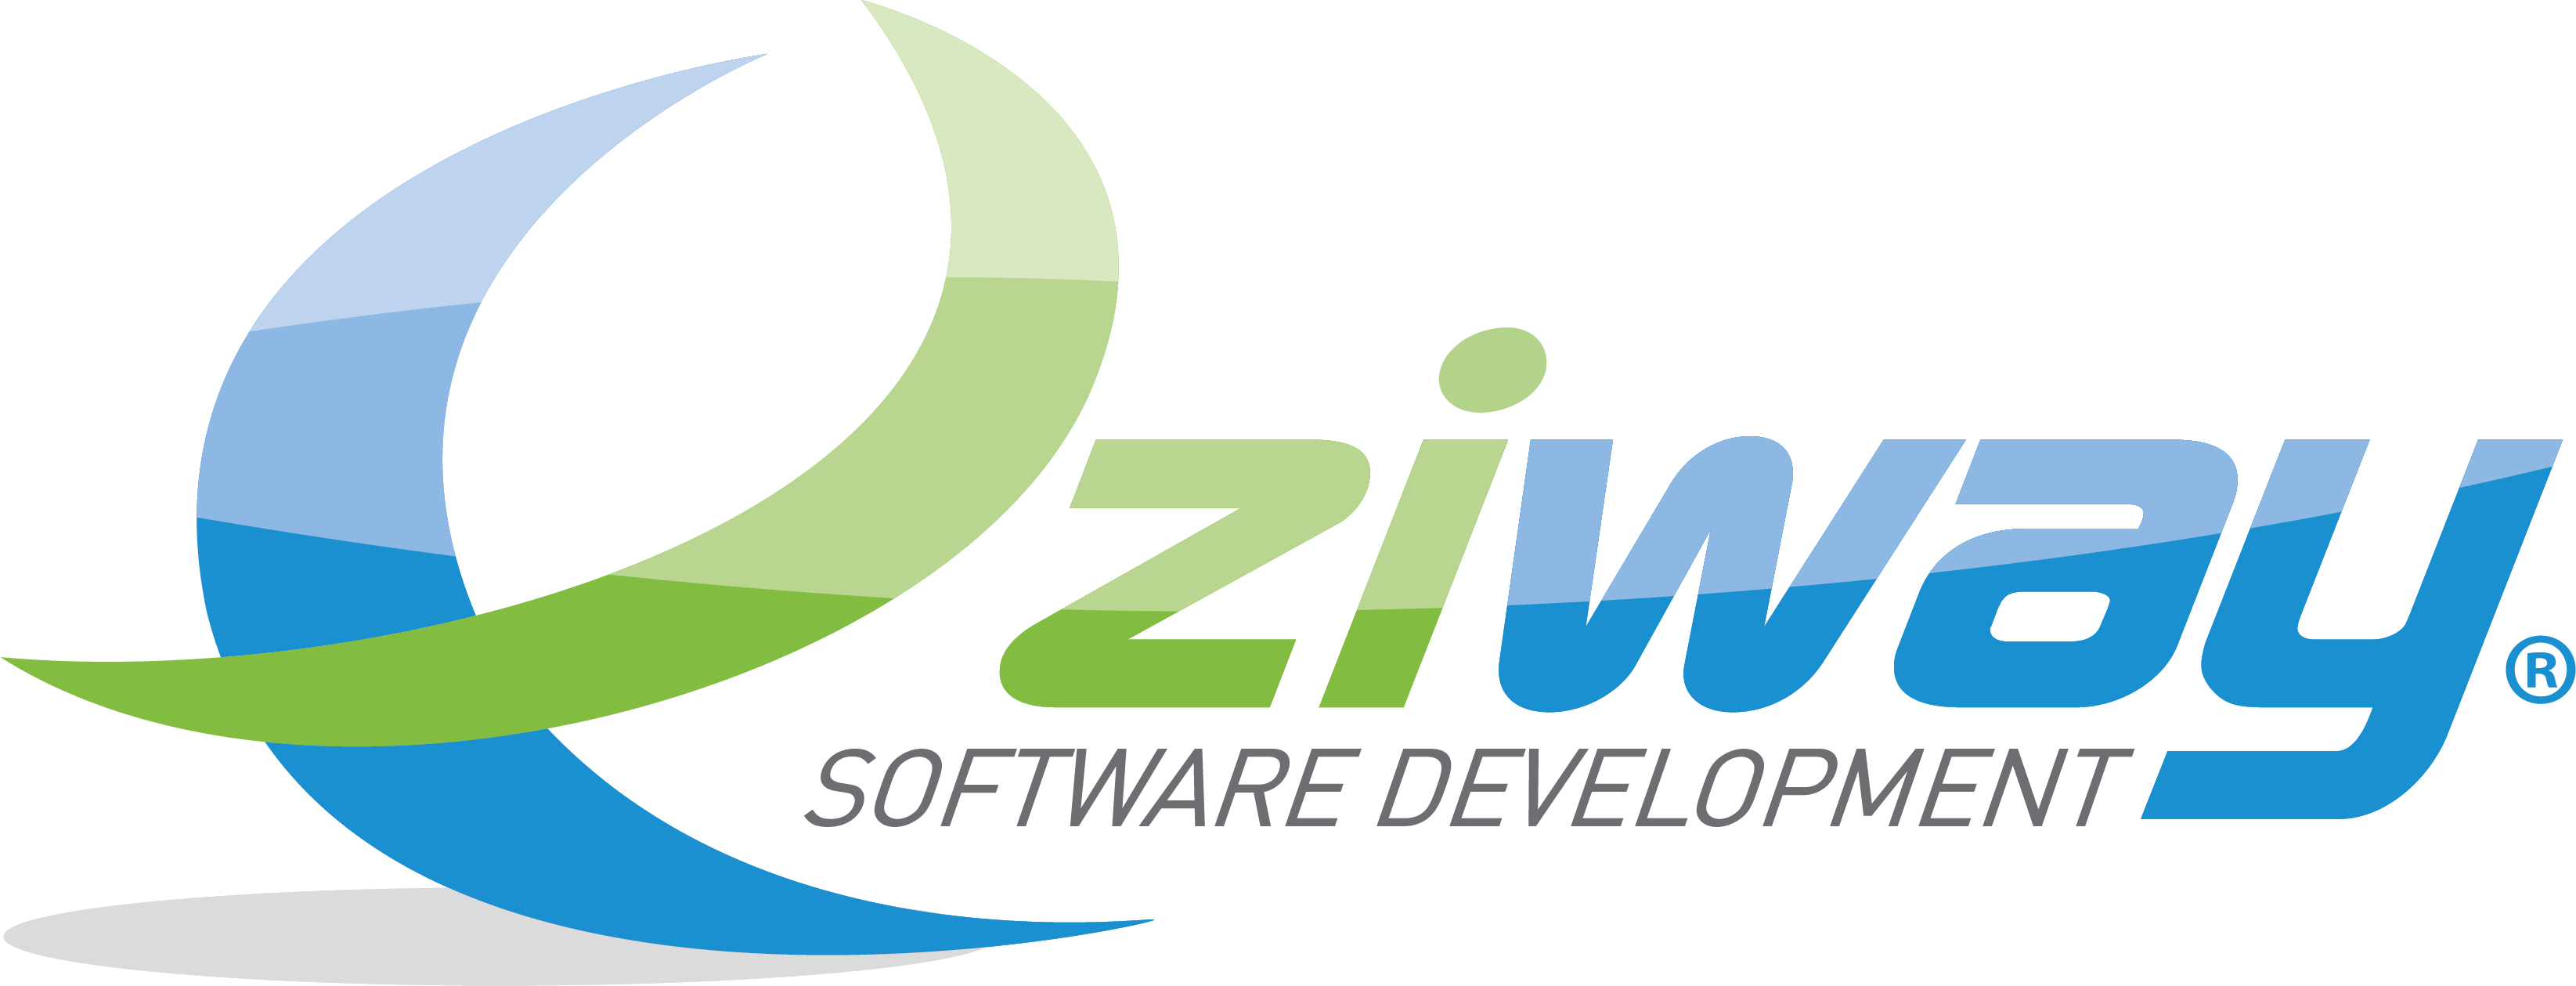 Eziway Software Development